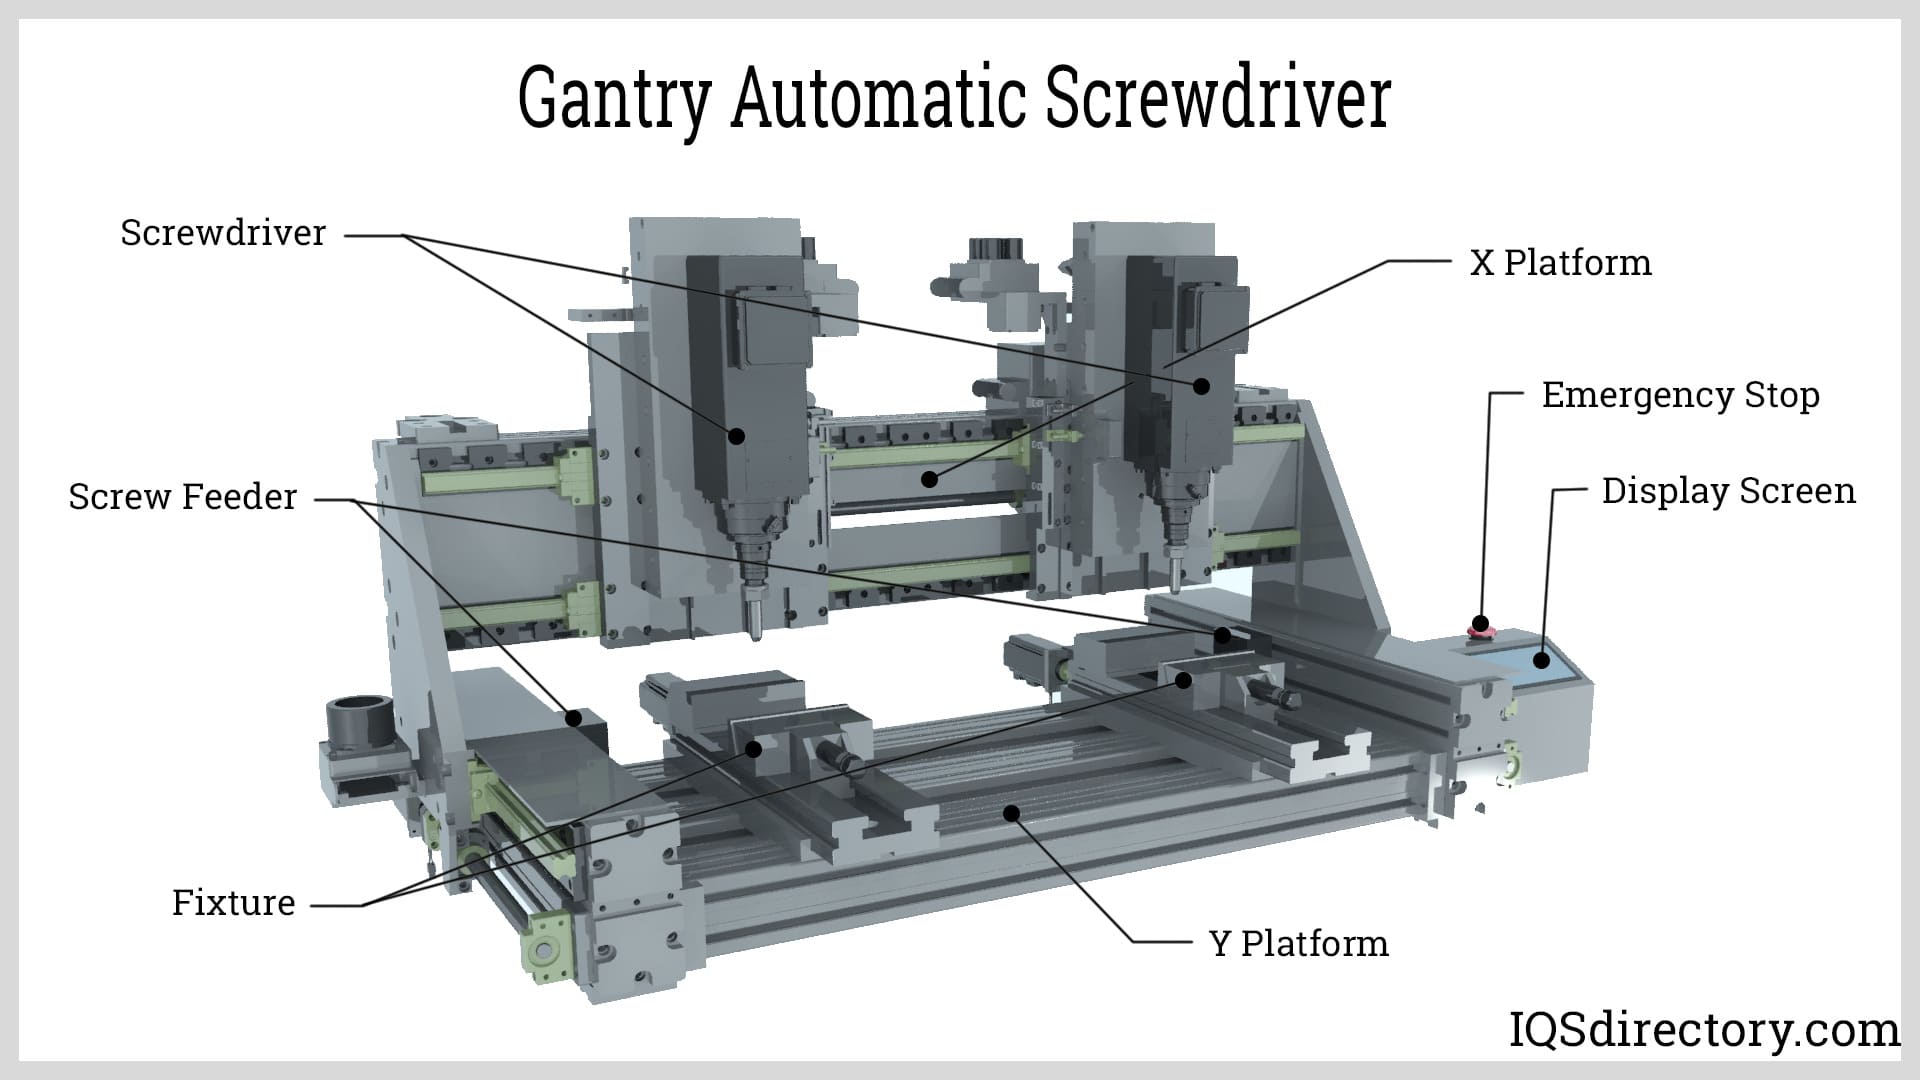 Gantry Automatic Screwdrivers